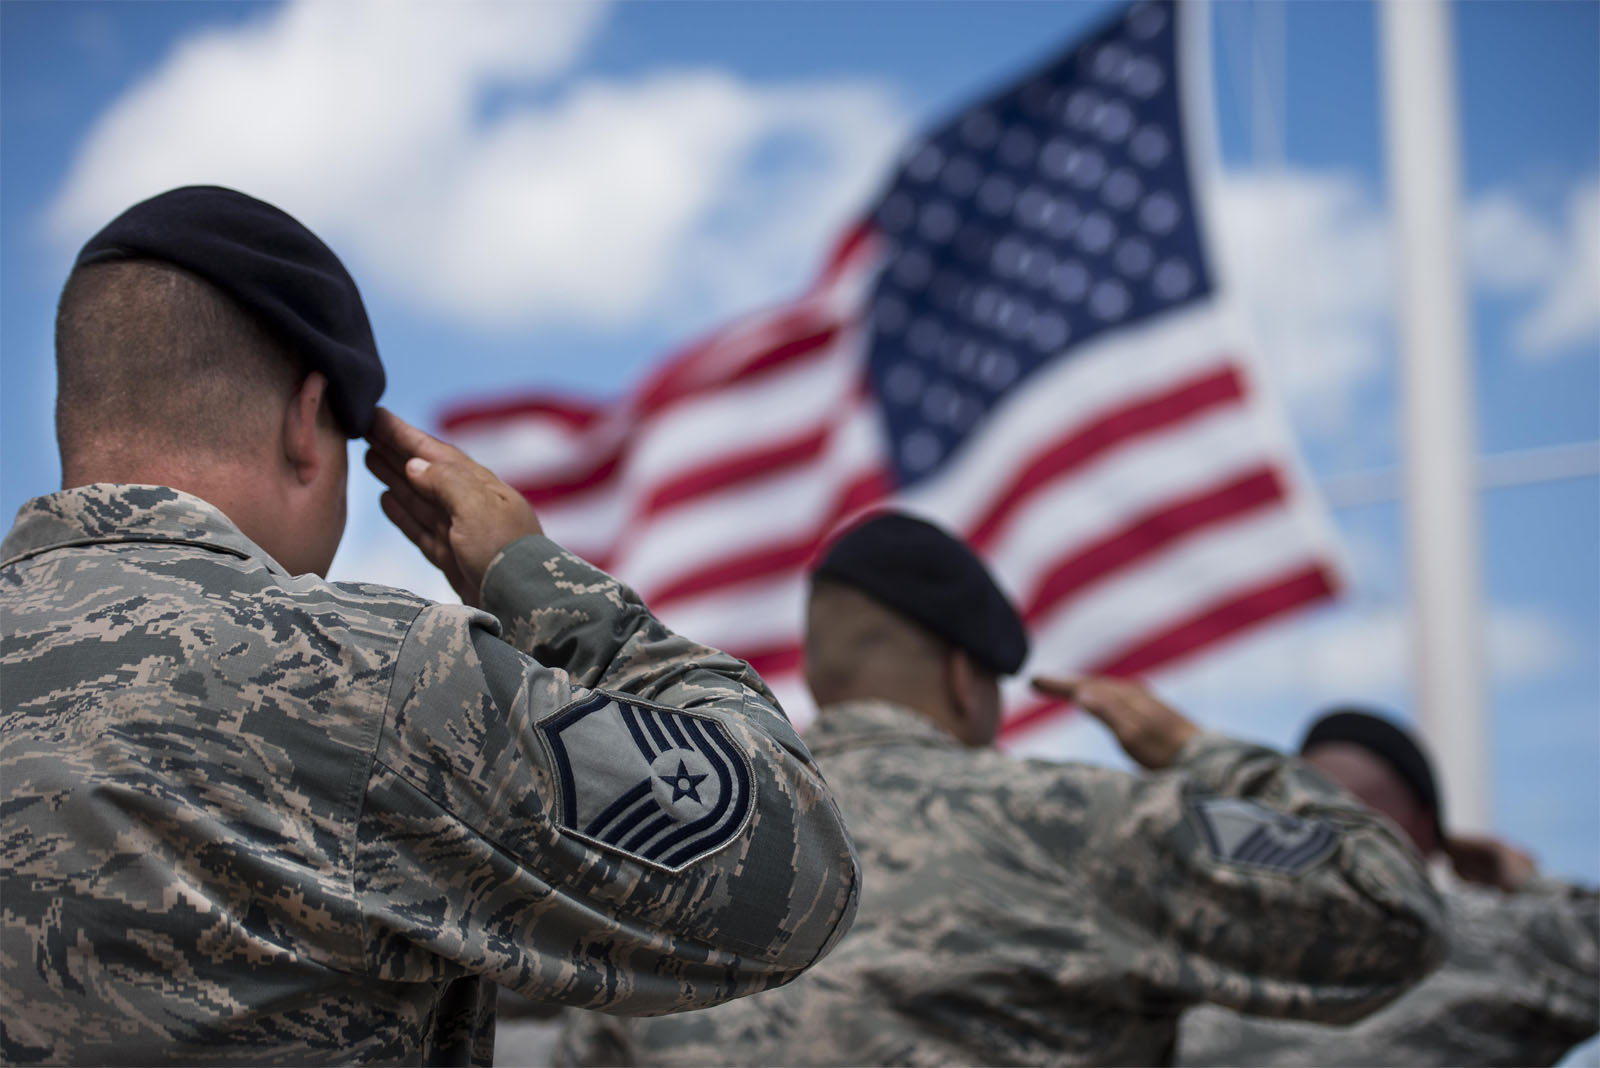 Soldier Saluting American Flag